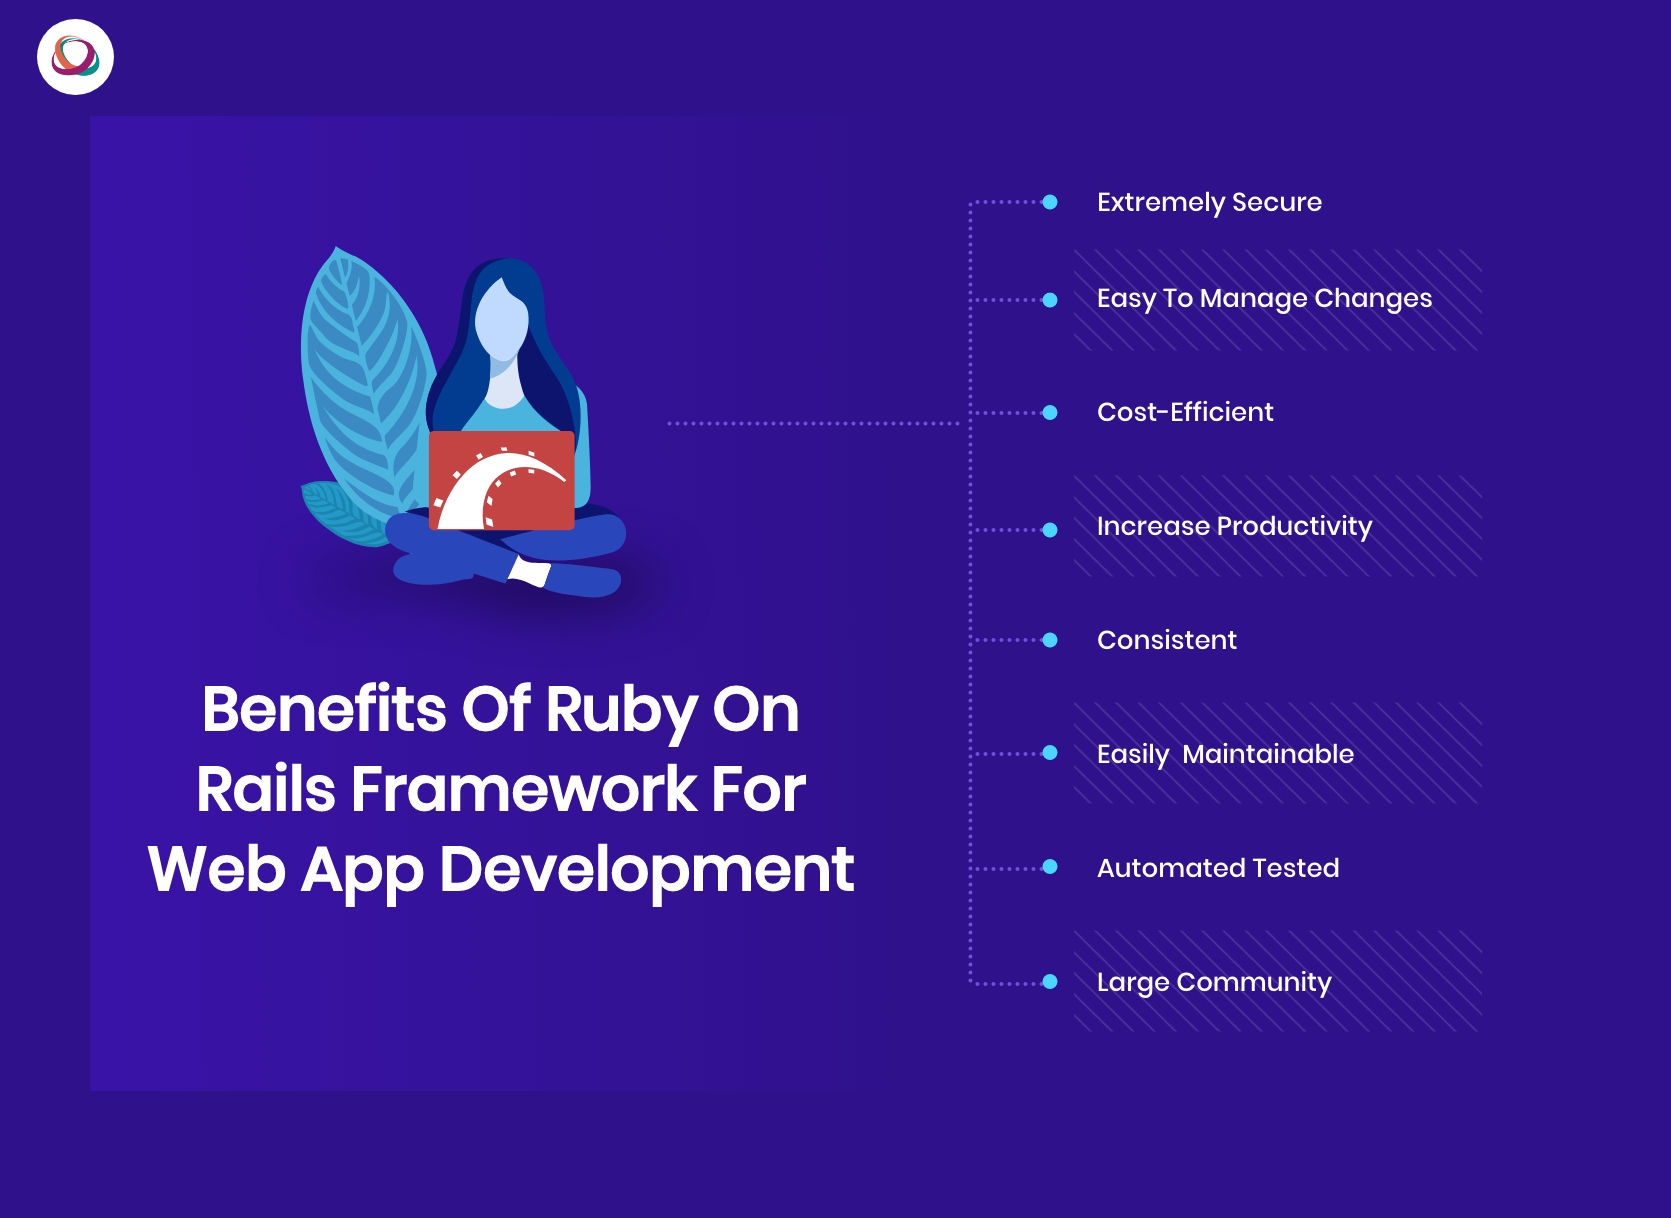 Benefits of Ruby on Rails framework for web app development
